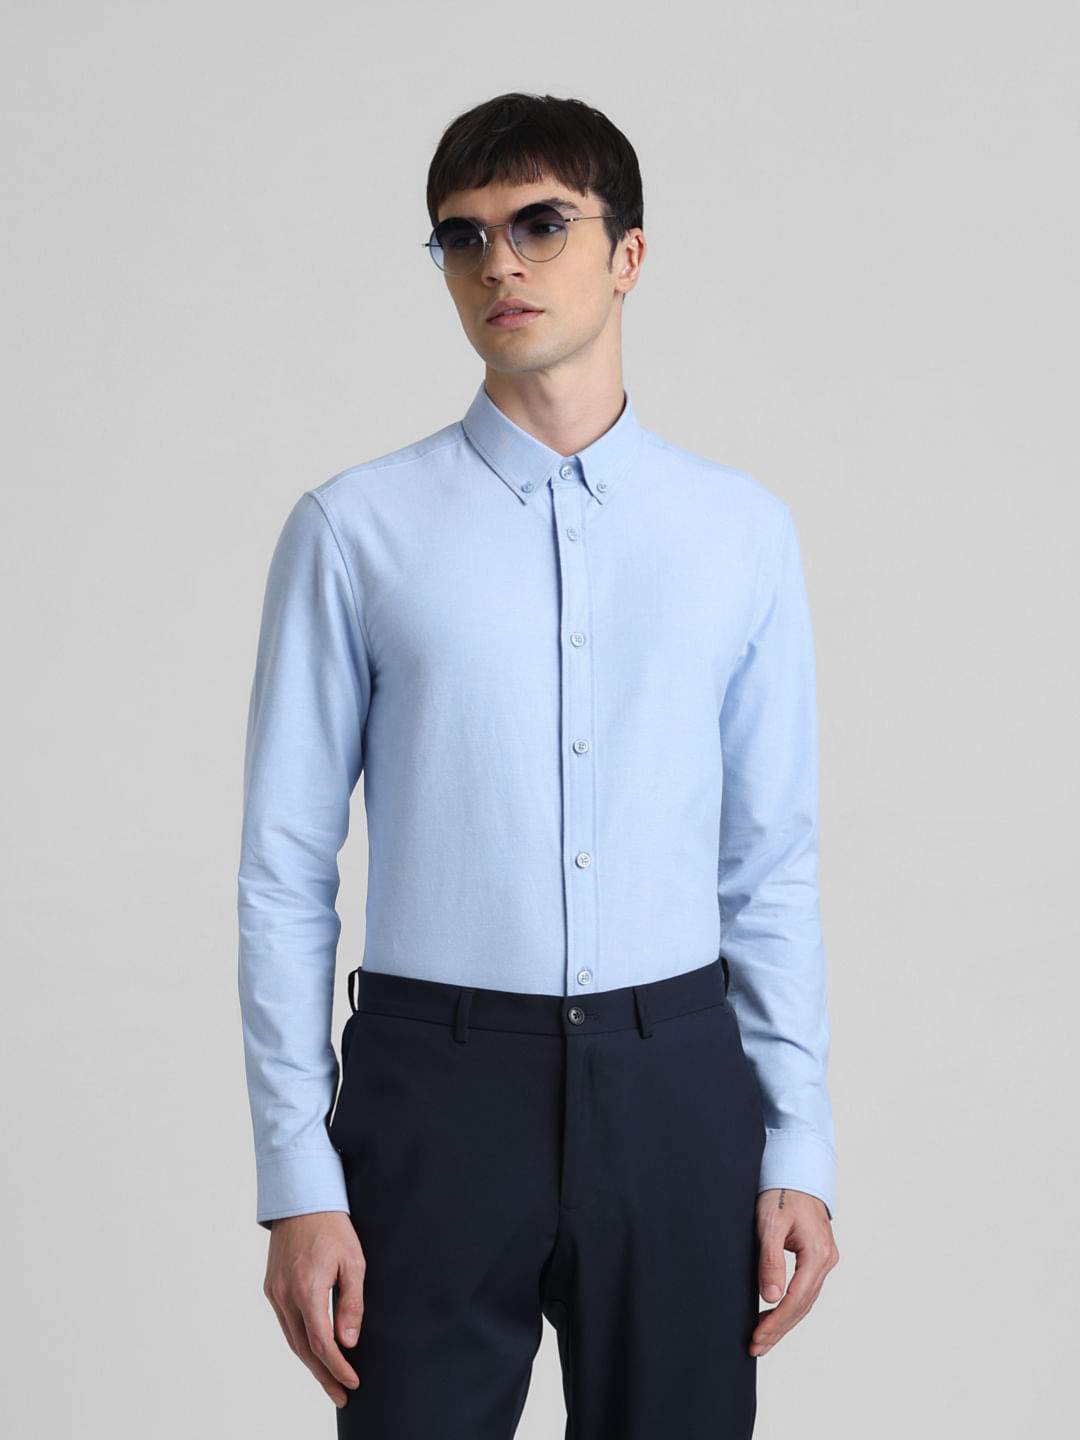 Best Pant Shirt Combination || Light Blue Pant Combination Ideas #lightblue  || by Look Stylish - YouTube